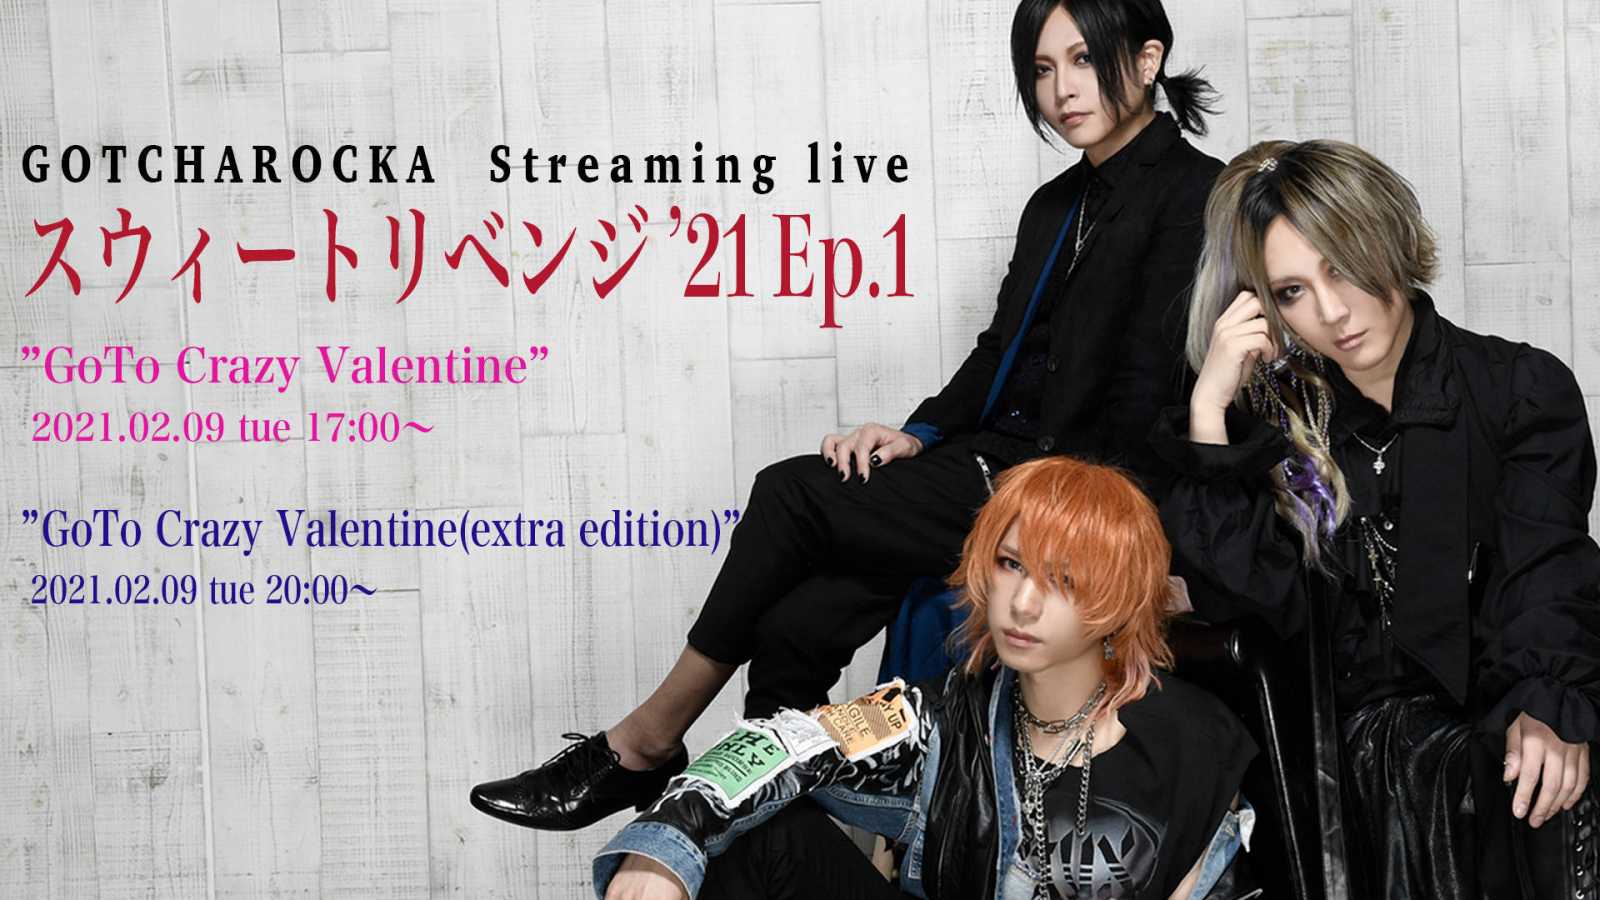 GOTCHAROCKA to Live Stream Two-Part Event 